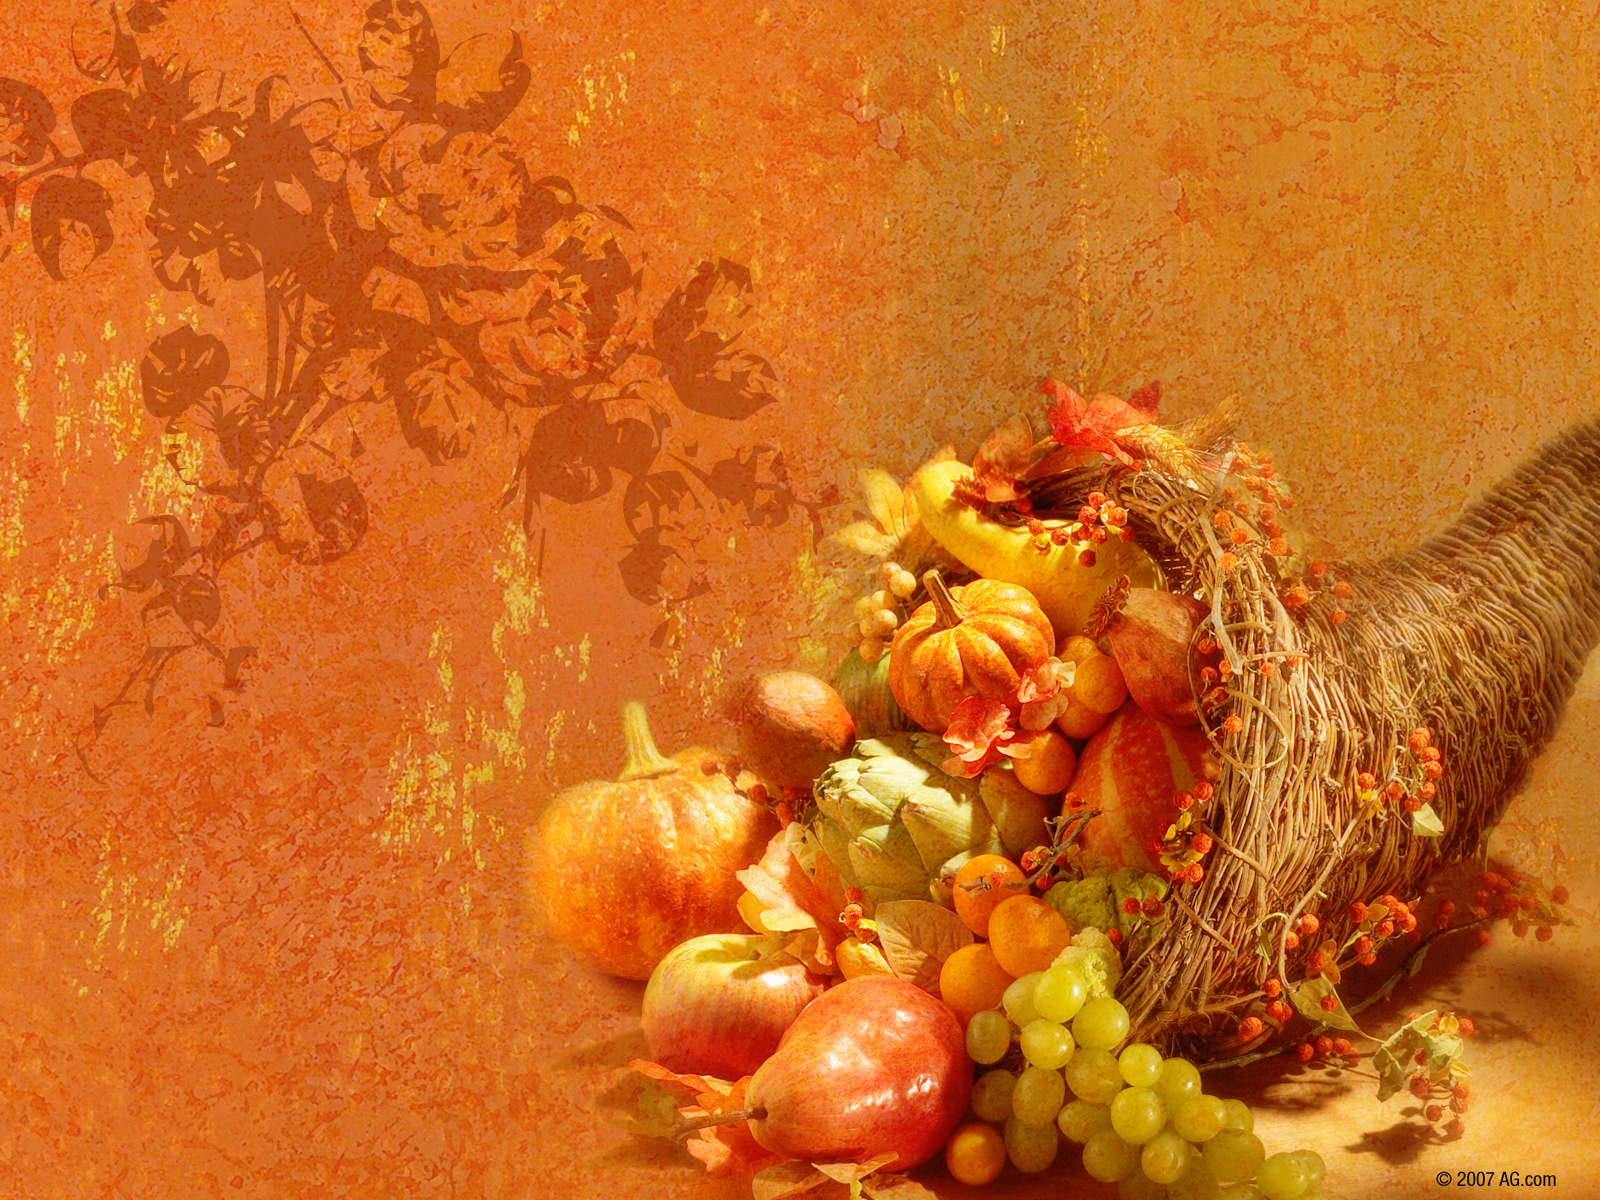 Thanksgiving wallpapers mobile phone - Wallpaper